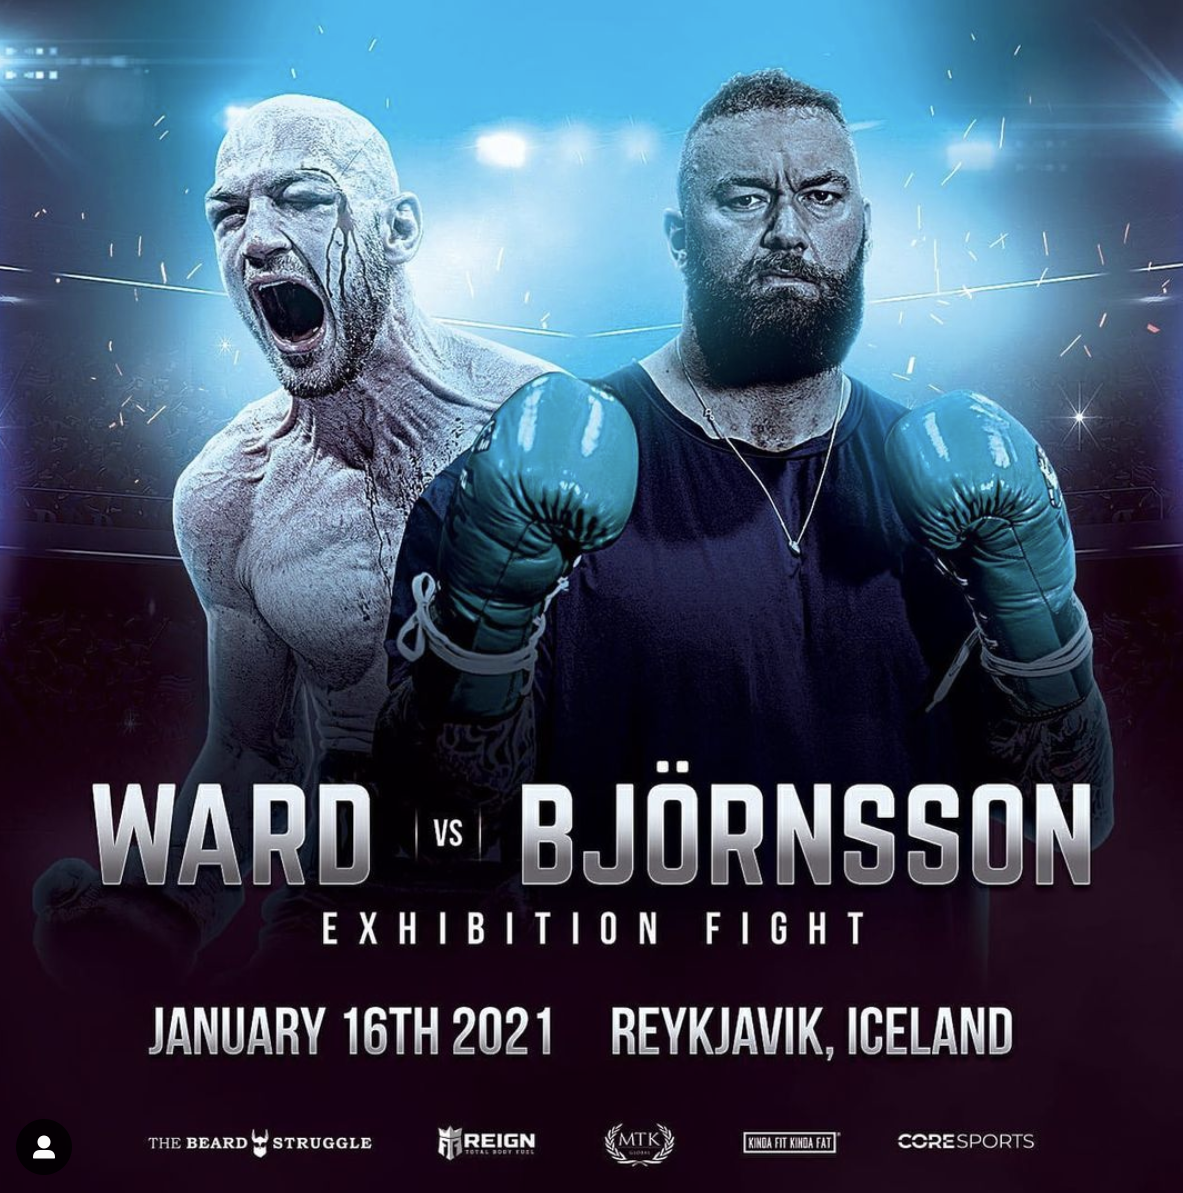 Hafthor Bjornsson vs Steven Ward Gösteri Boks Maçı Berabere Sona Erdi